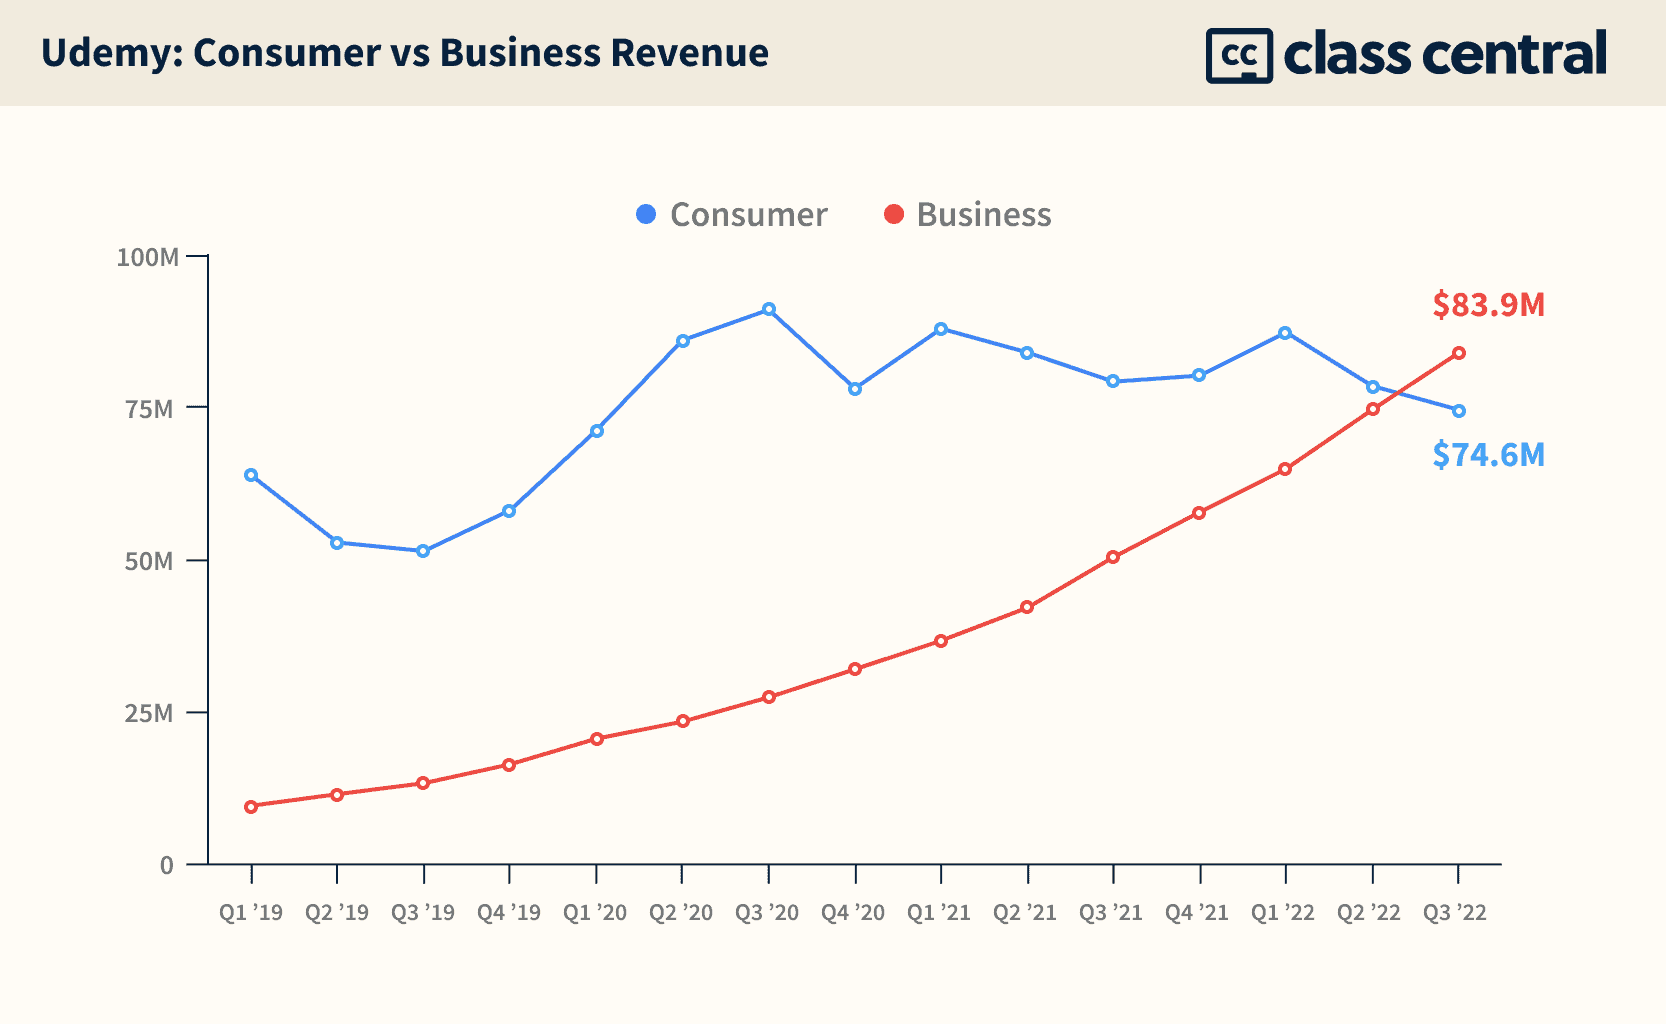 Udemy’s business revenue overtook its consumer revenue in 2022